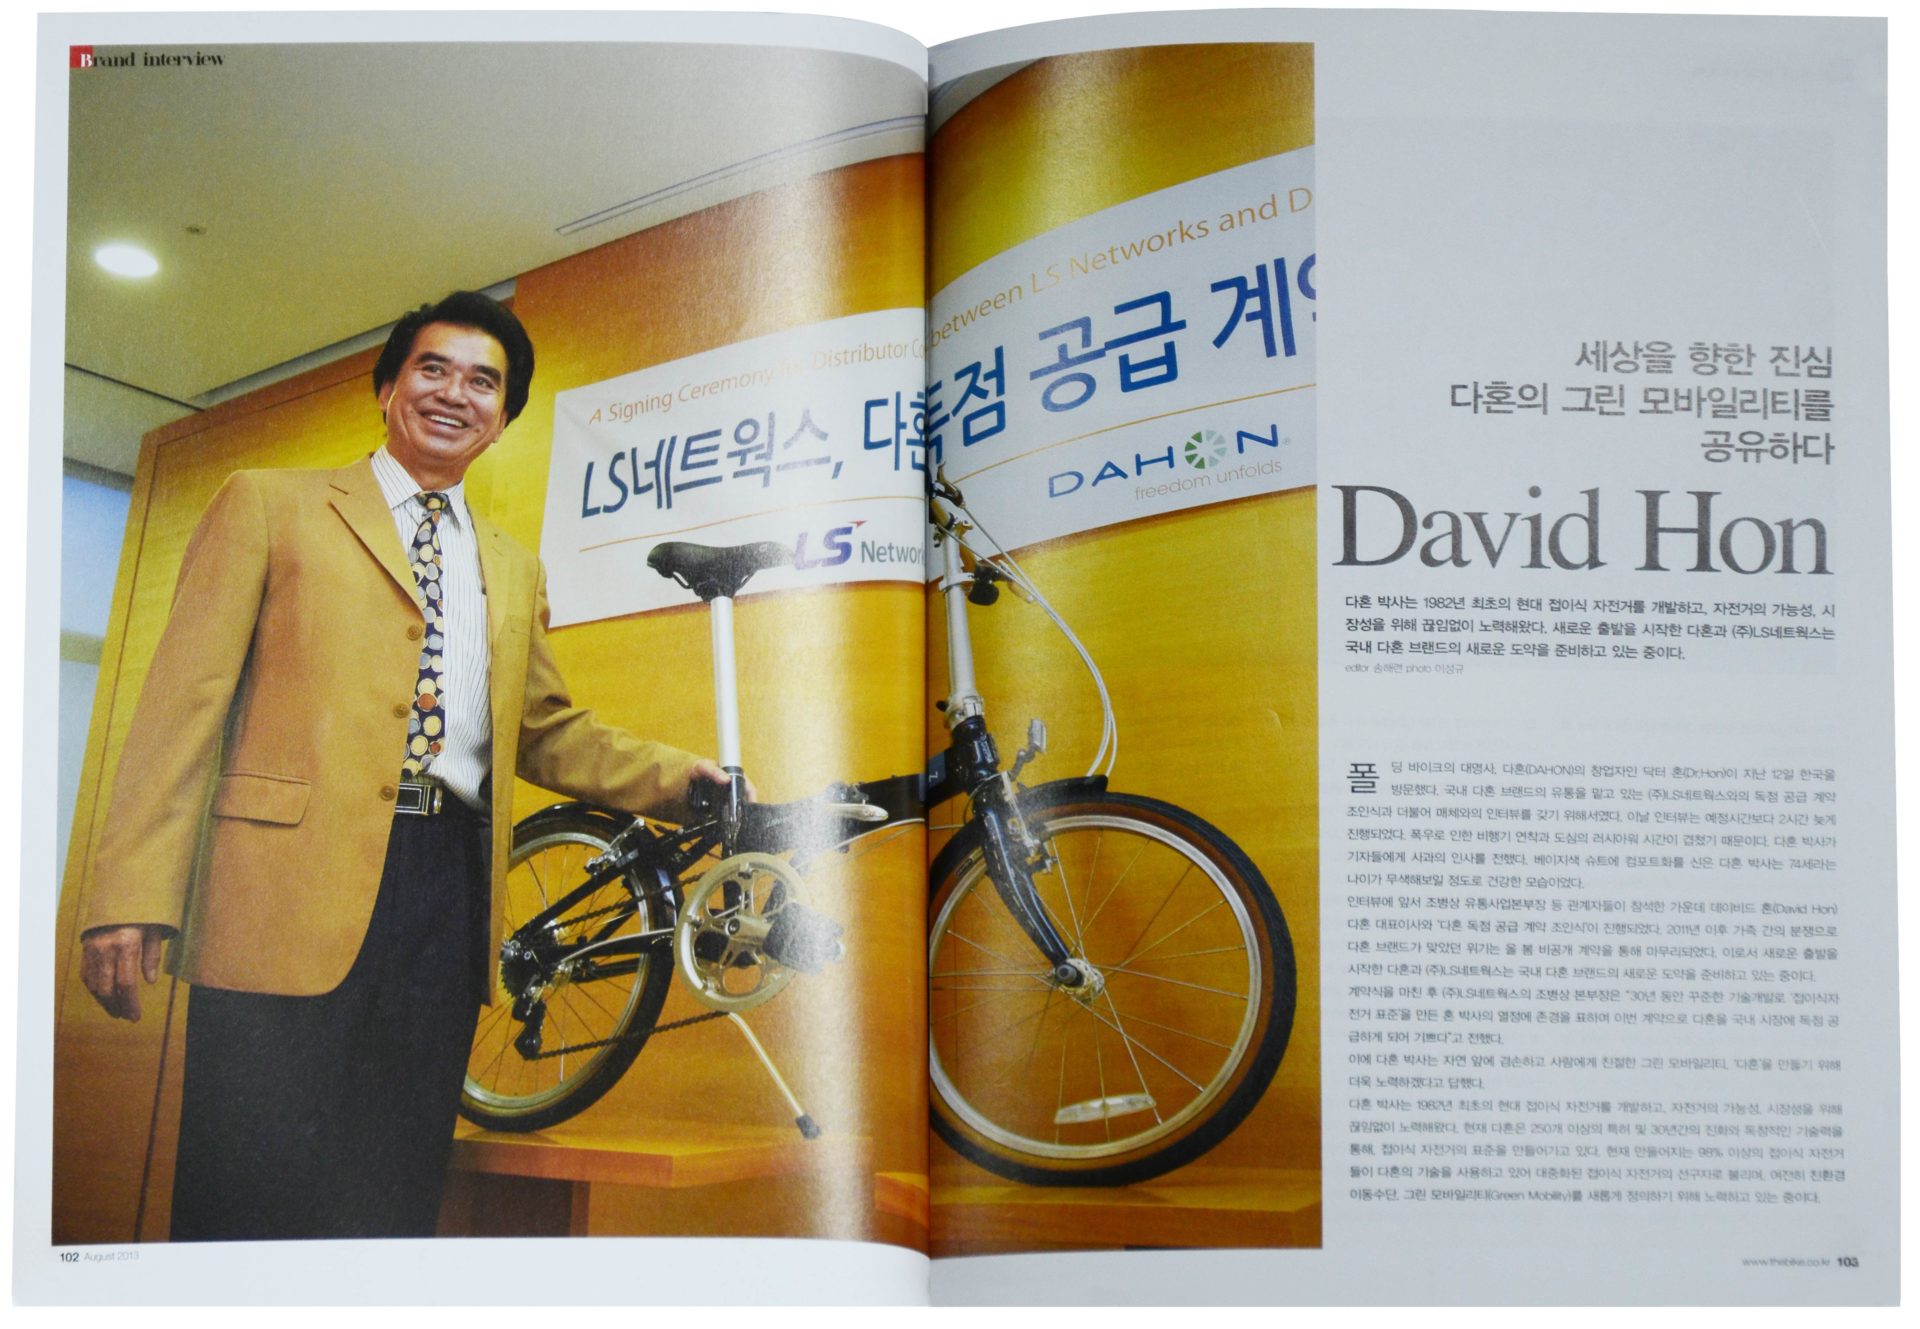 DAHON brand interview in the bike july 2013